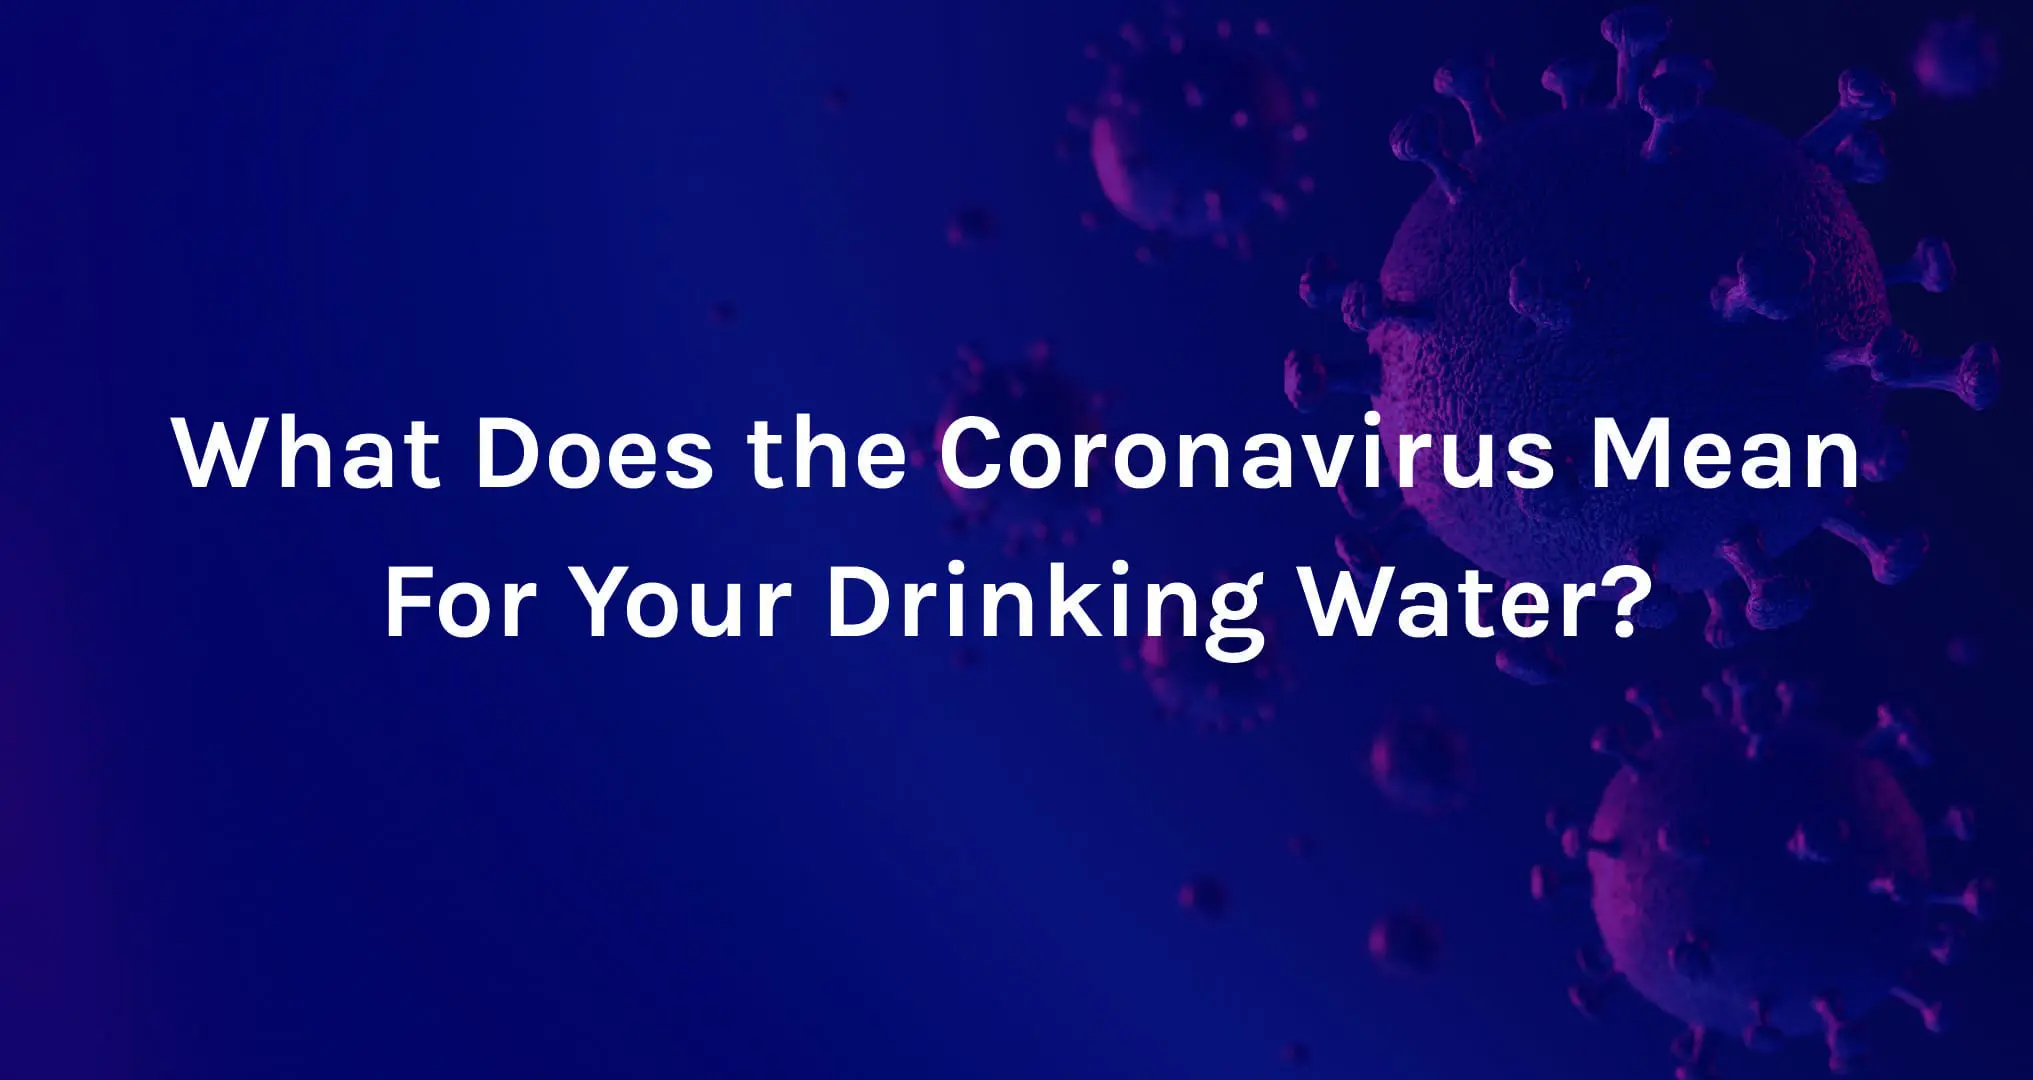 Coronavirus background with text ontop